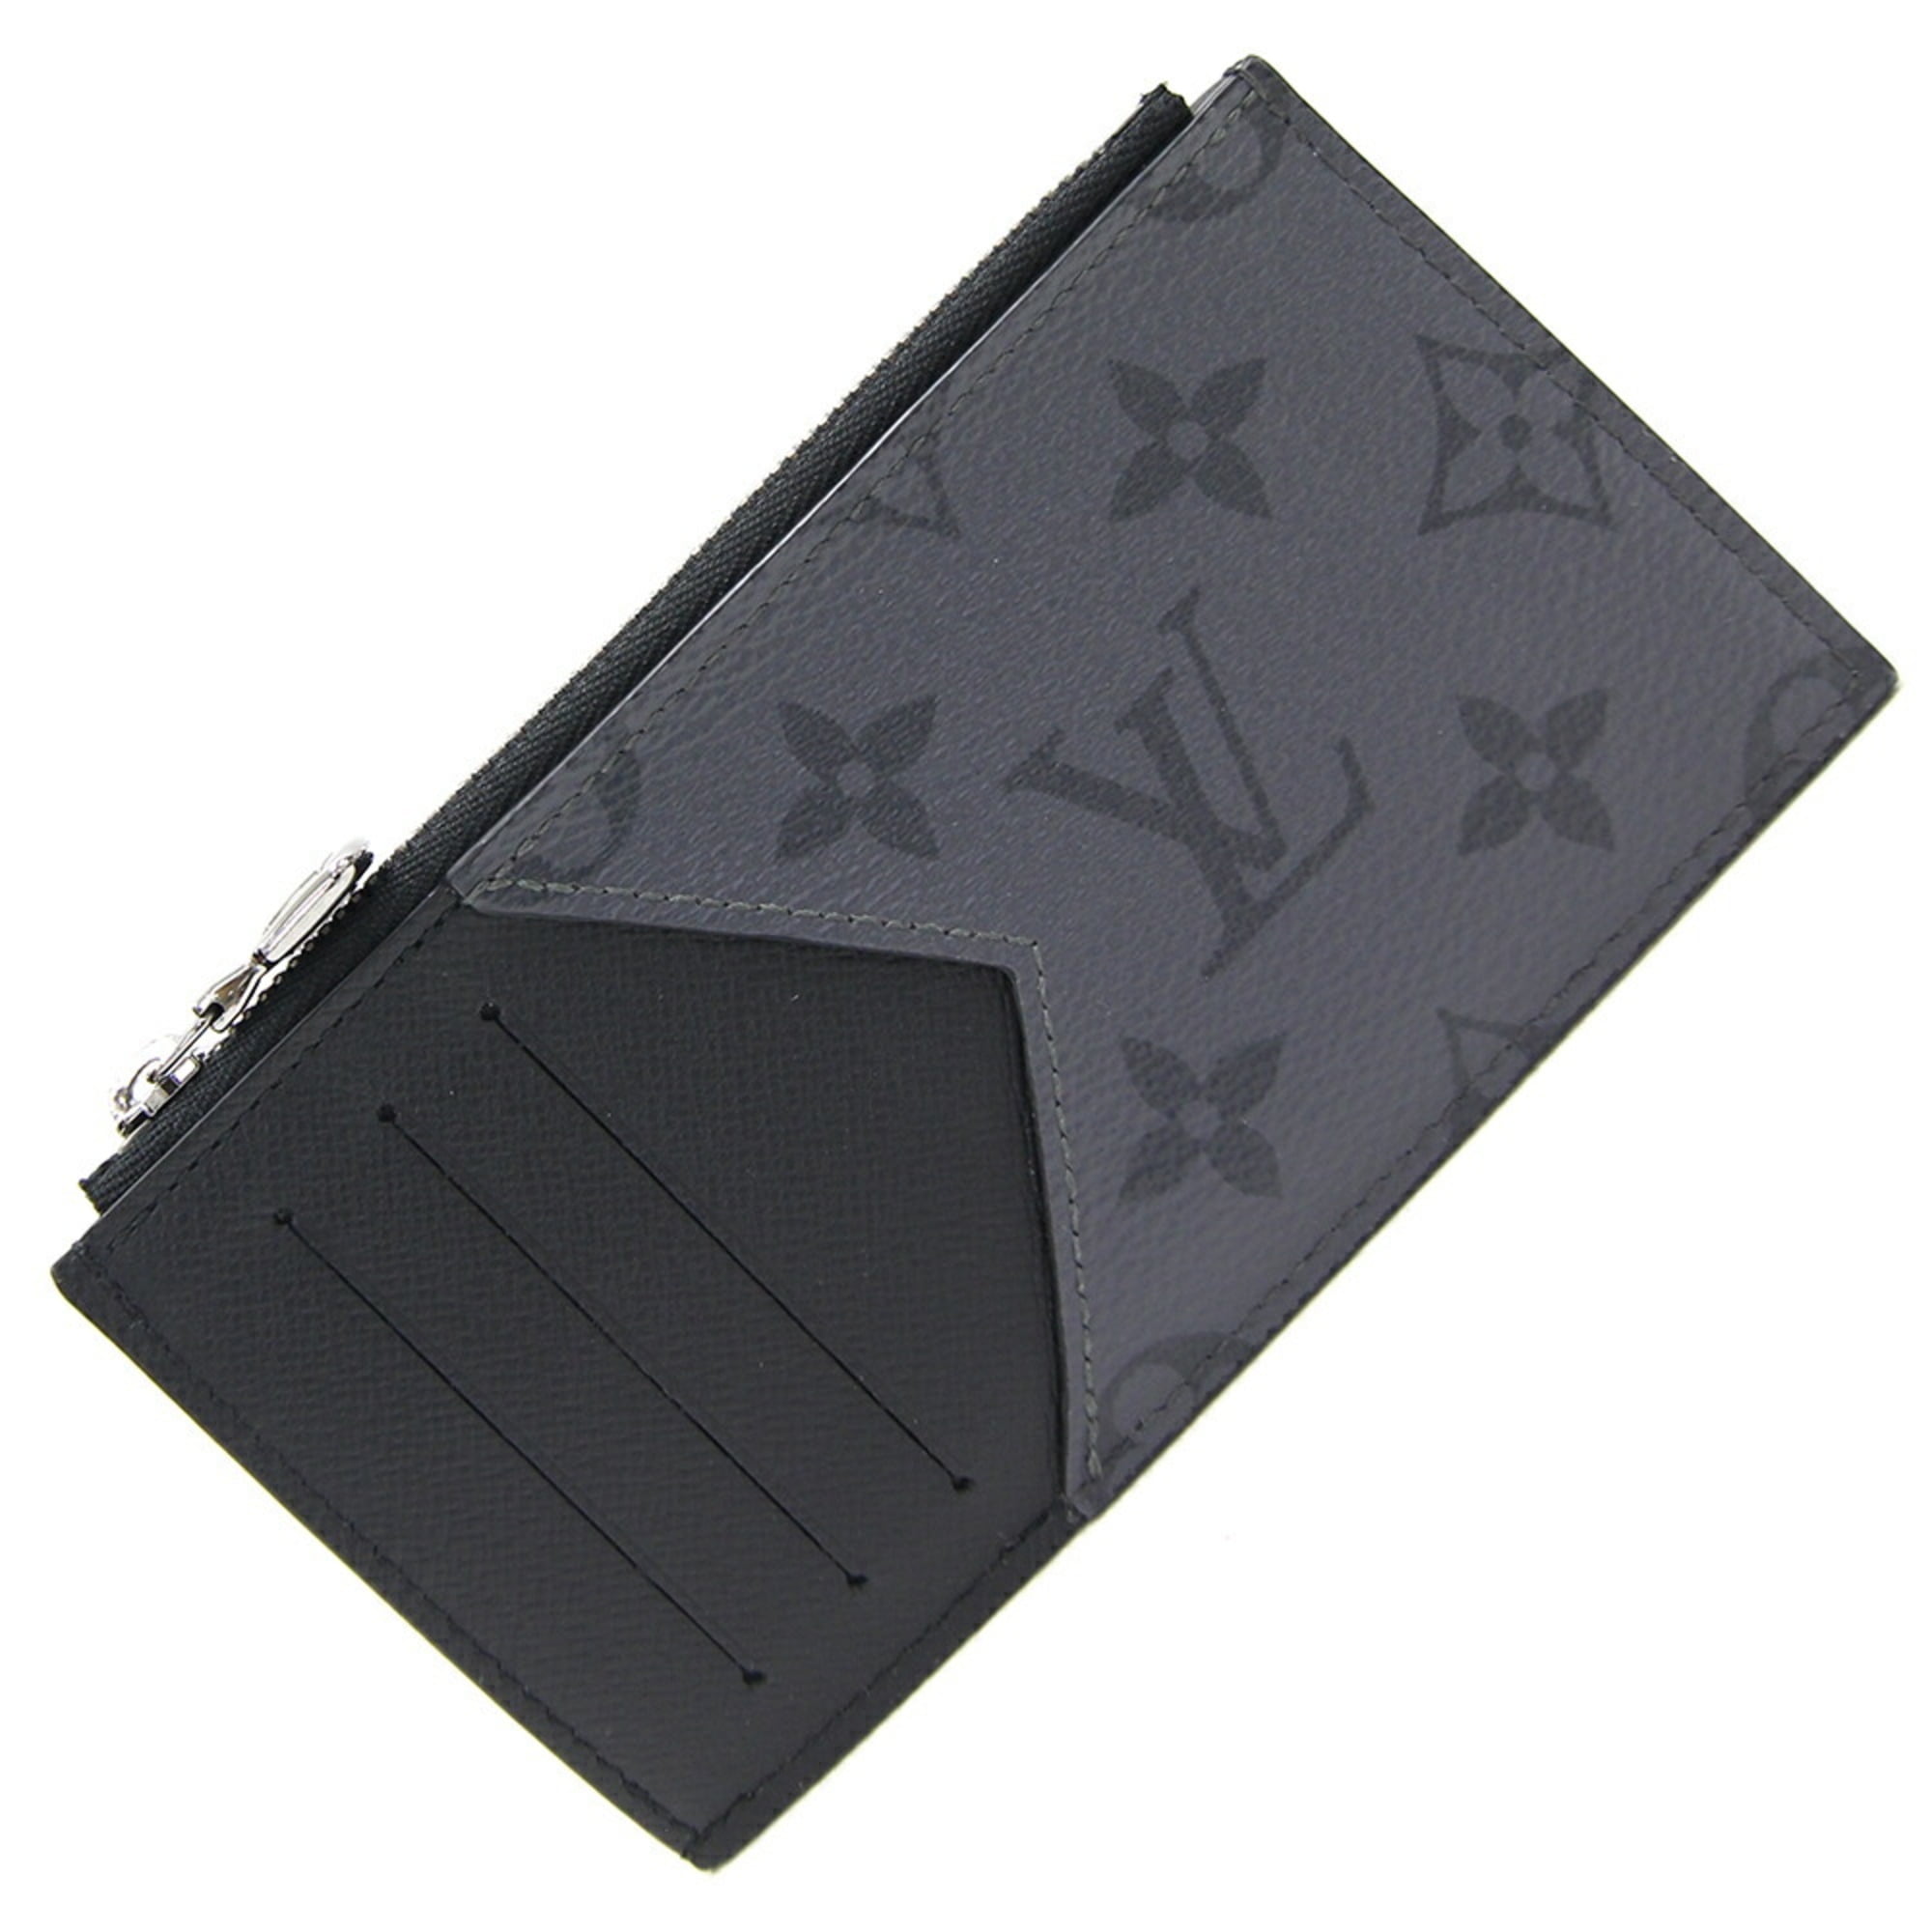 Louis Vuitton Reverse Monogram Card Holder Review 